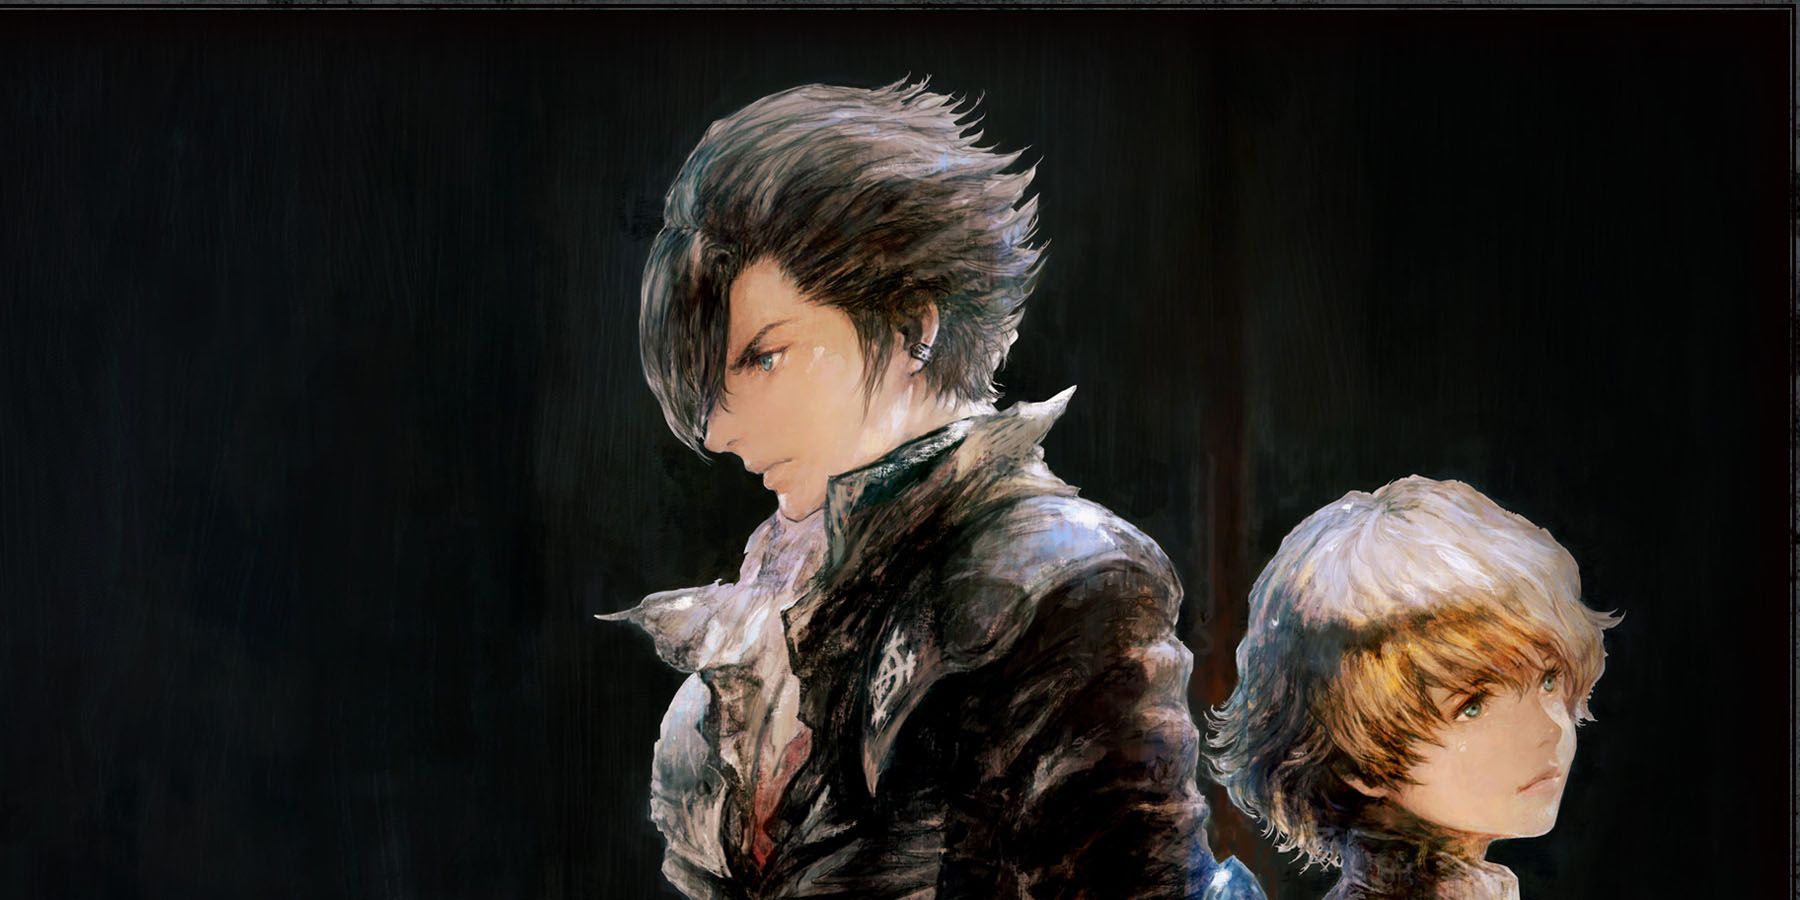 Final Fantasy 16-ის მთავარი ამბავი სრულად არის დაწერილი